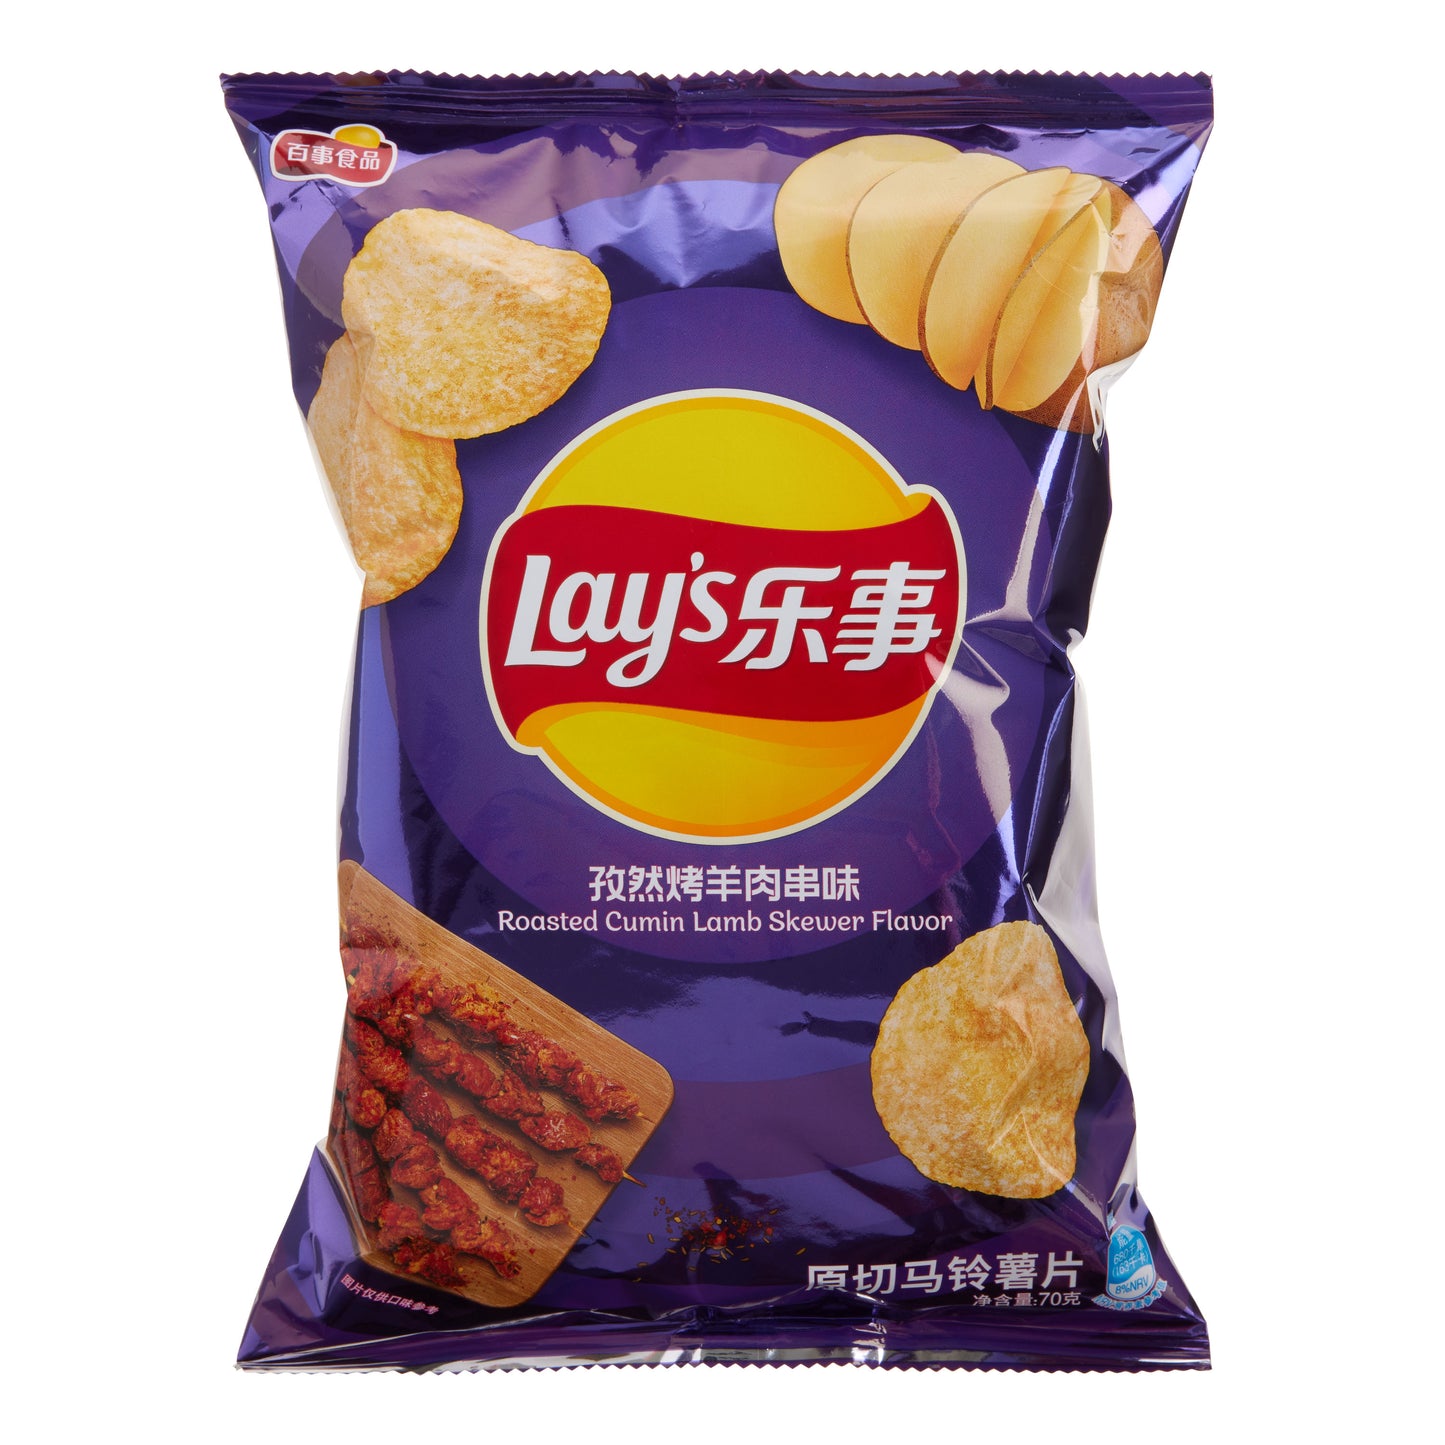 Lays Potato Chips - Roasted Cumin Lamb Skewer